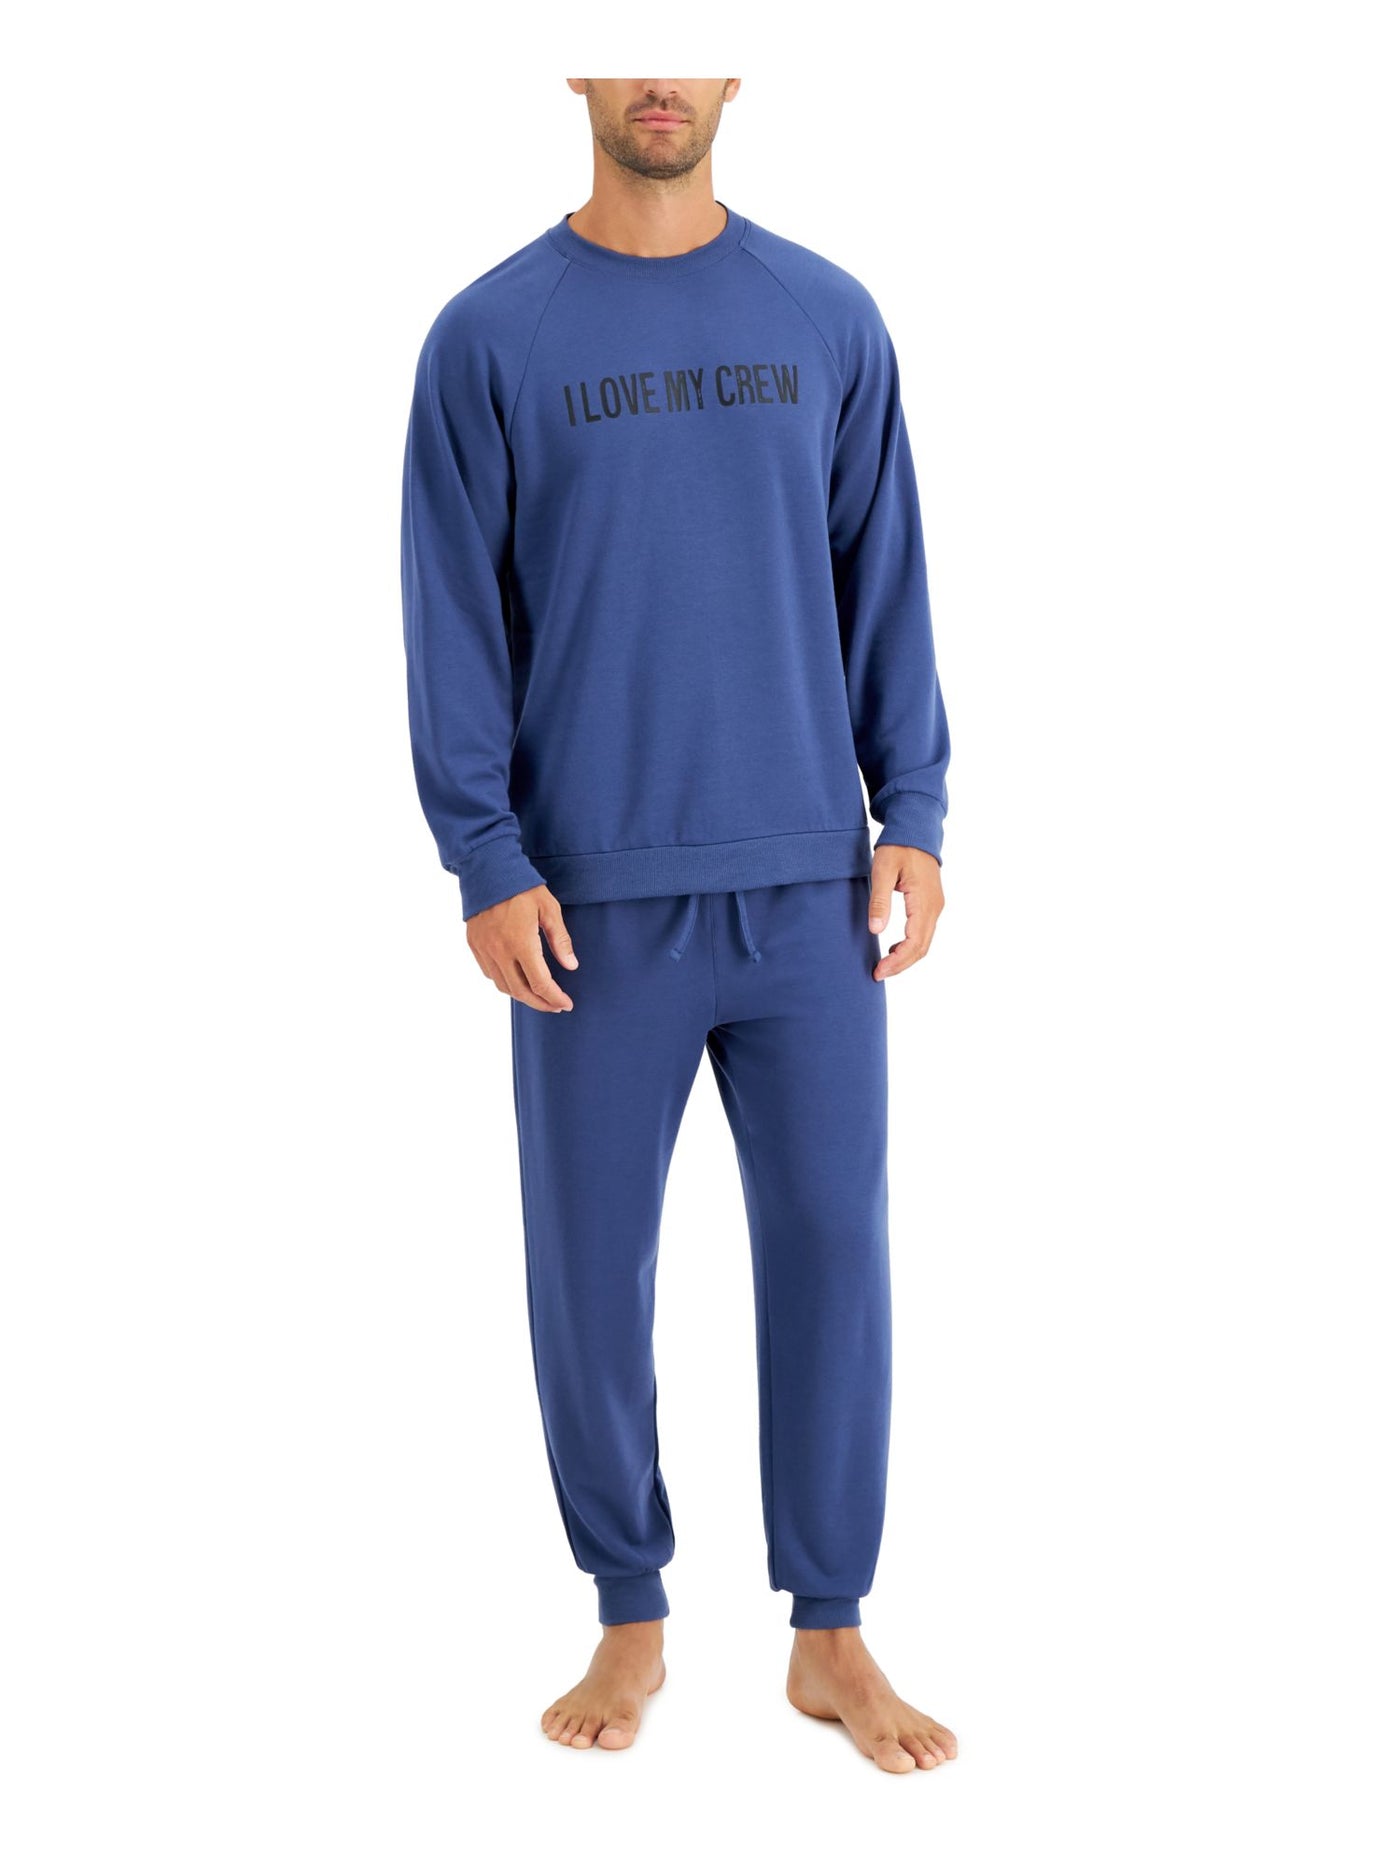 FAMILY PJs Mens Crew Love Blue Printed Drawstring Long Sleeve T-Shirt Top Cuffed Pants Fleece Pajamas L